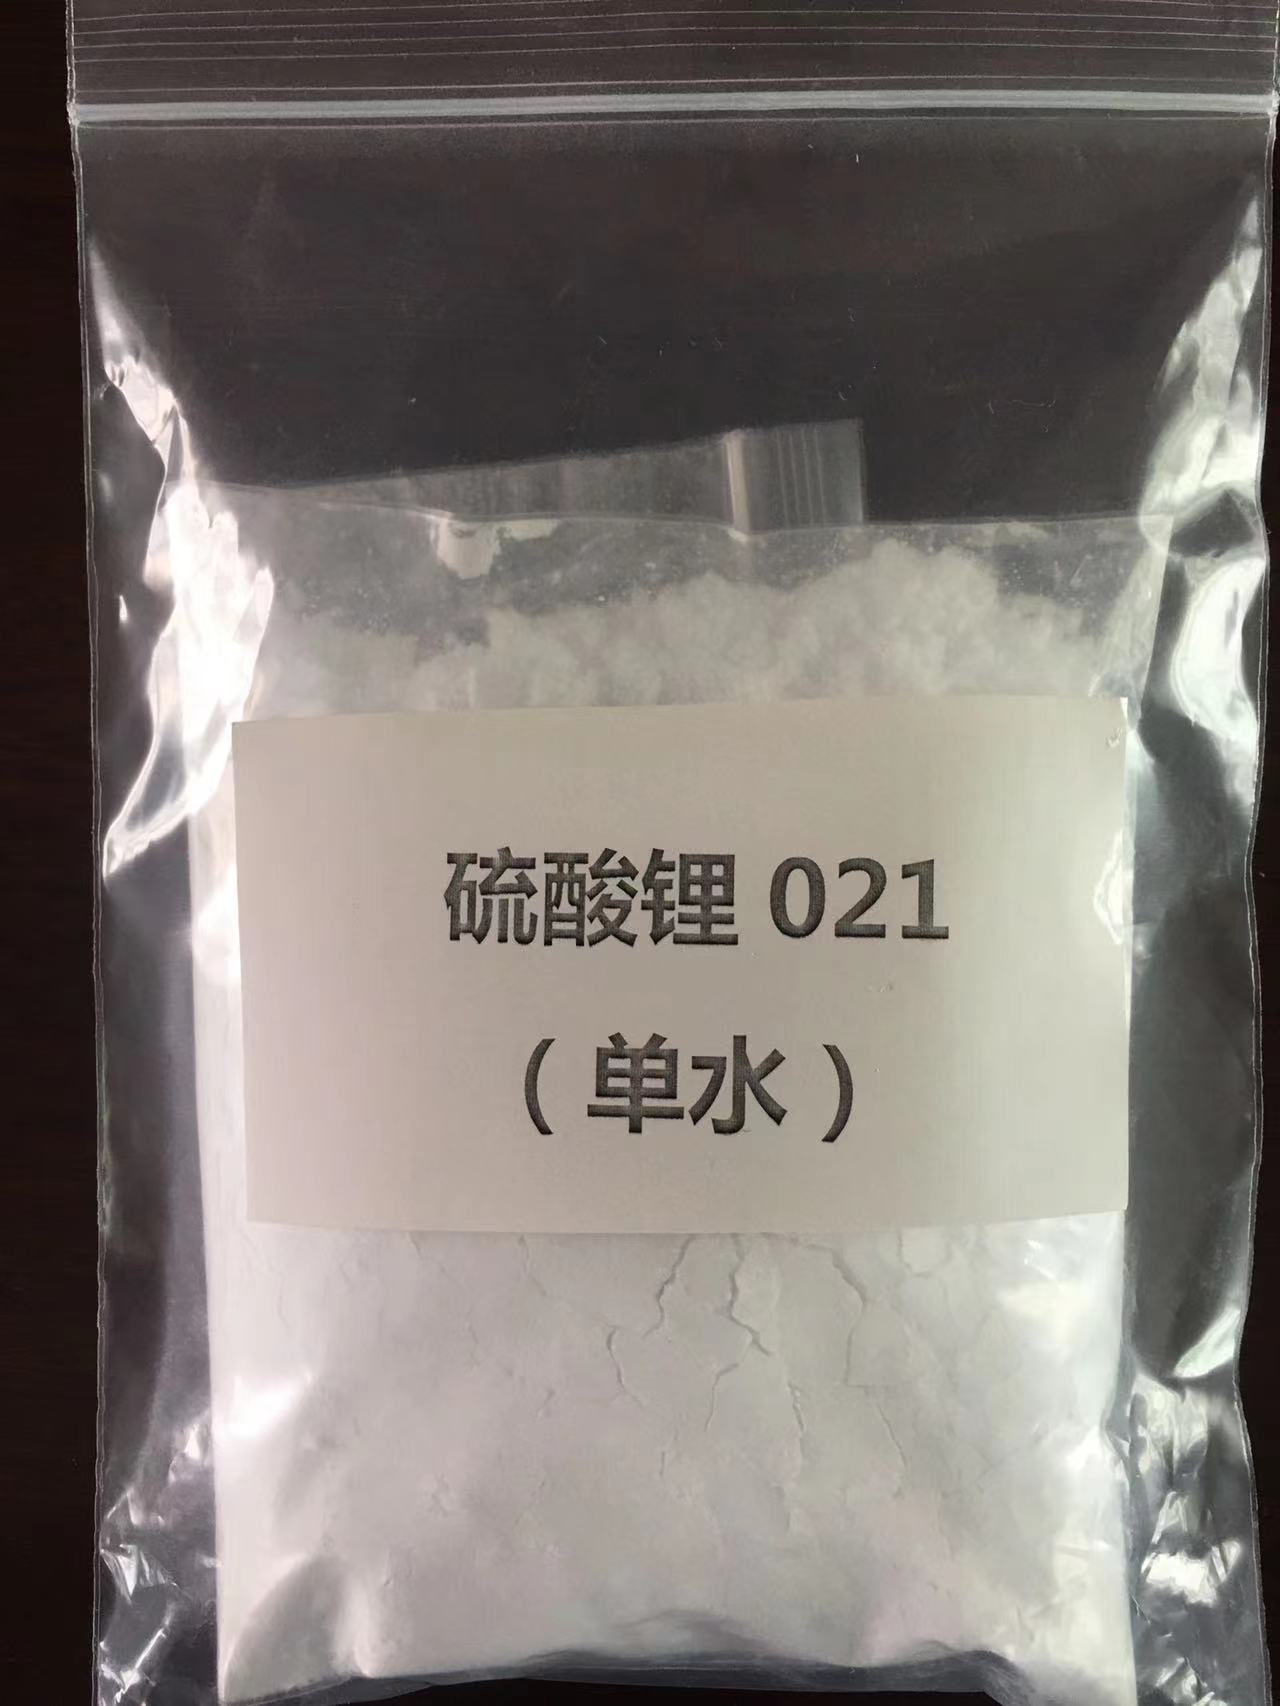  Lithium Sulfate Monohydrate